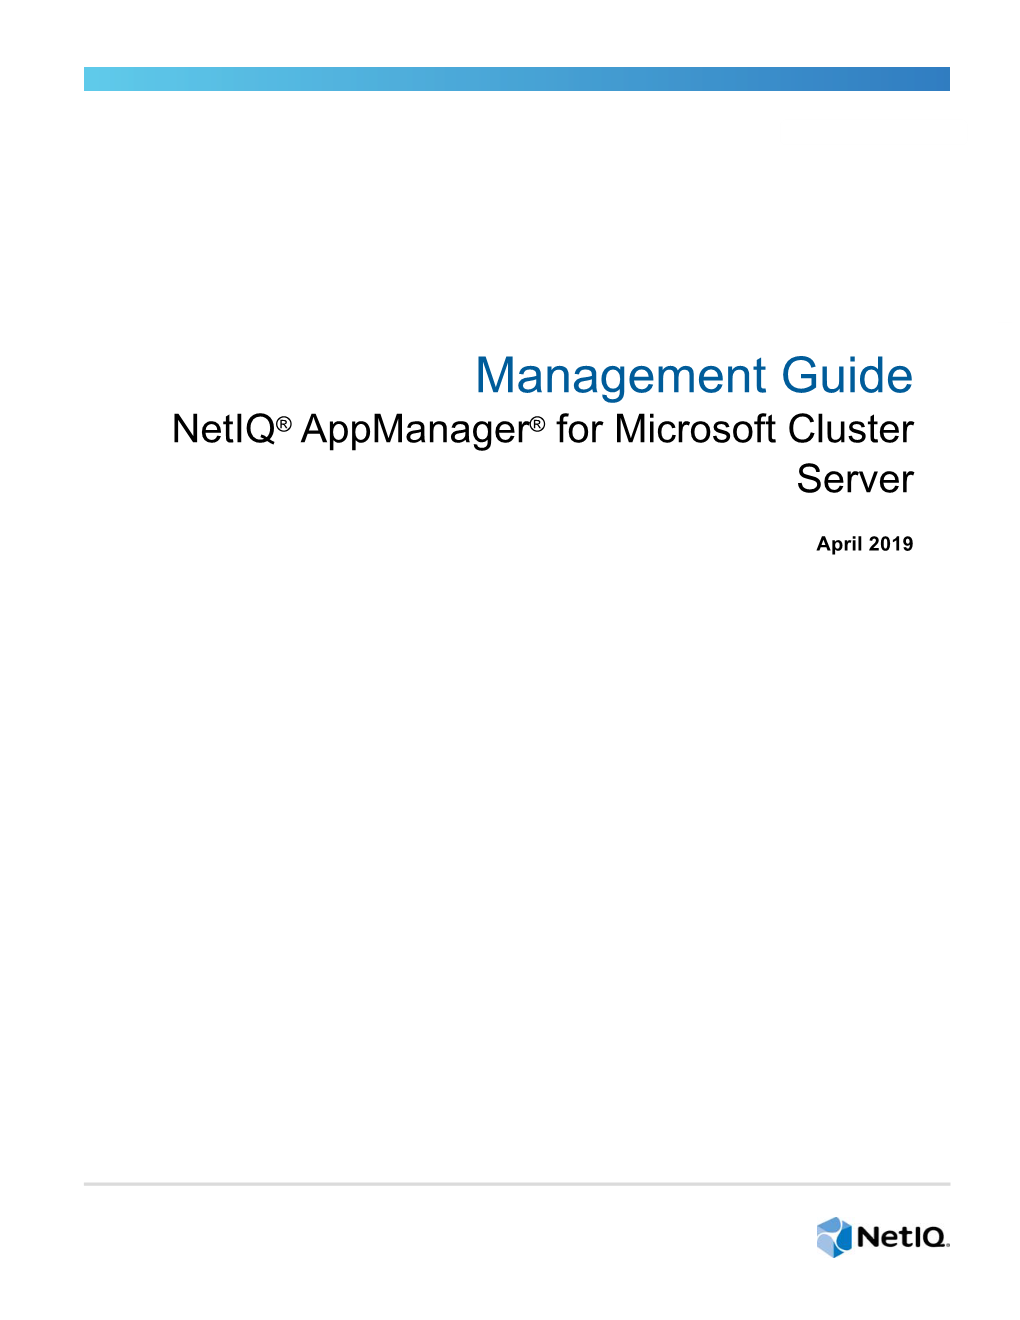 Netiq Appmanager for Microsoft Cluster Server Management Guide